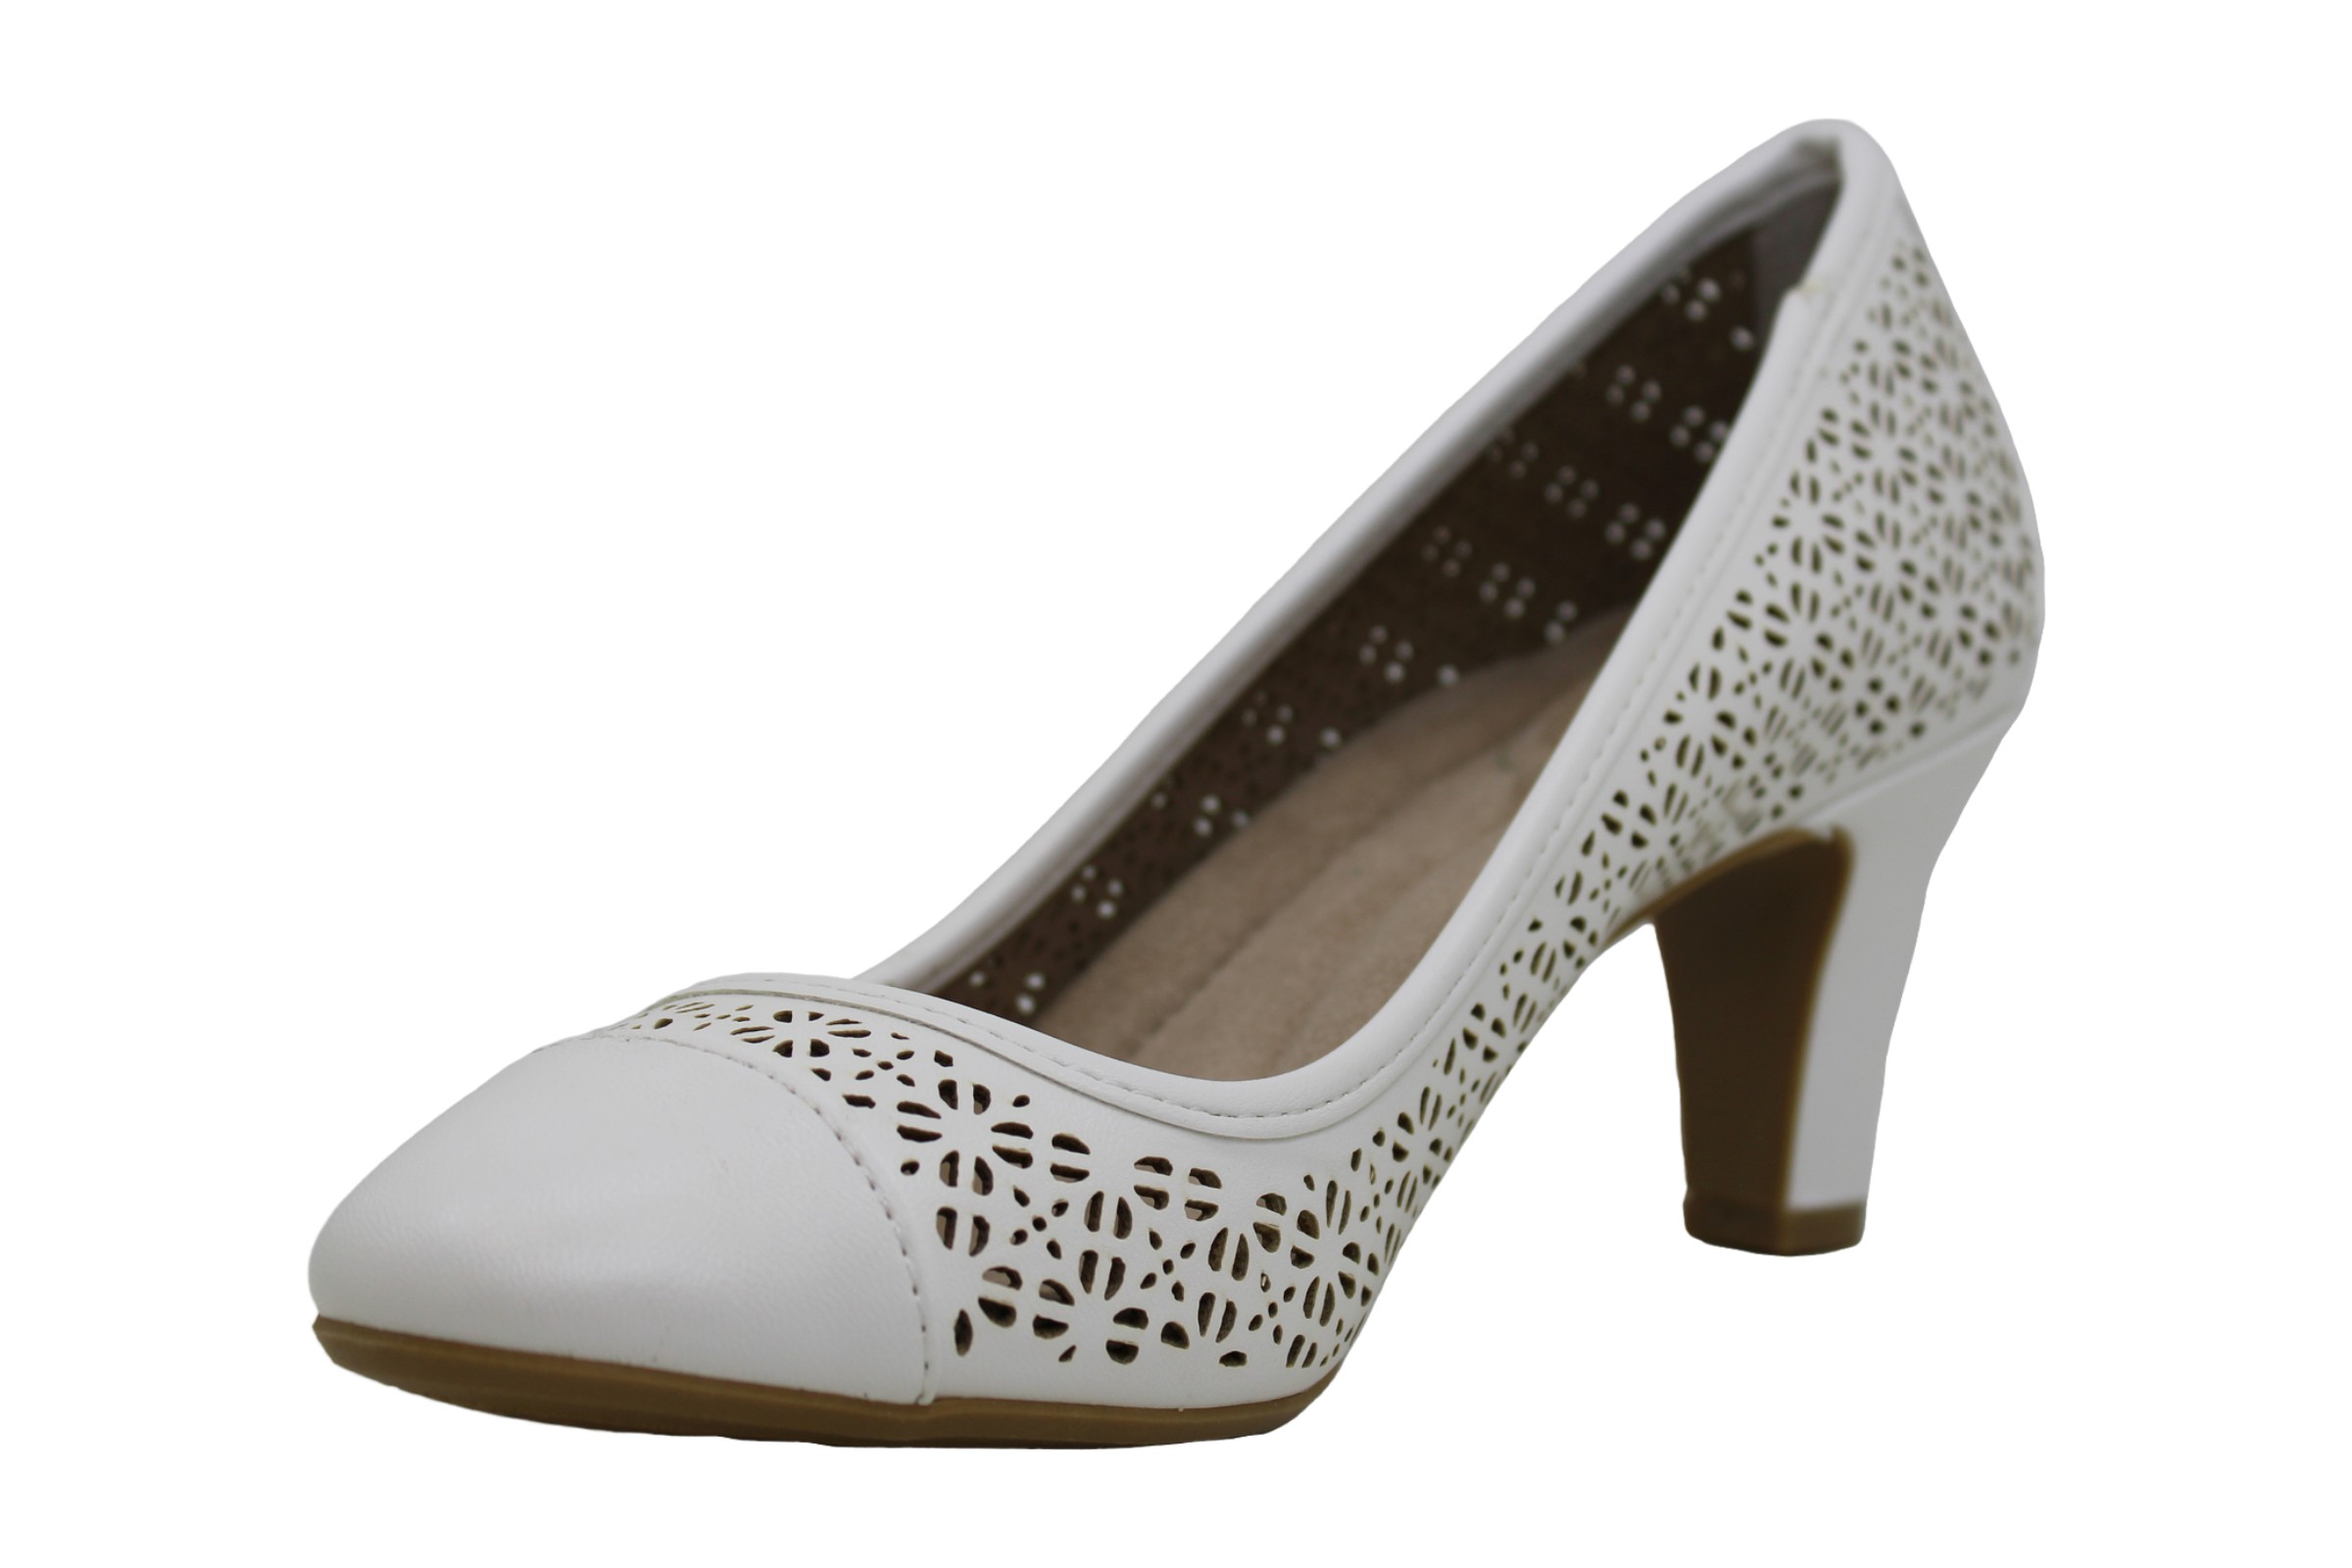 Giani Bernini Womens Heels & Pumps in White Color, Size 7.5 AWS | eBay